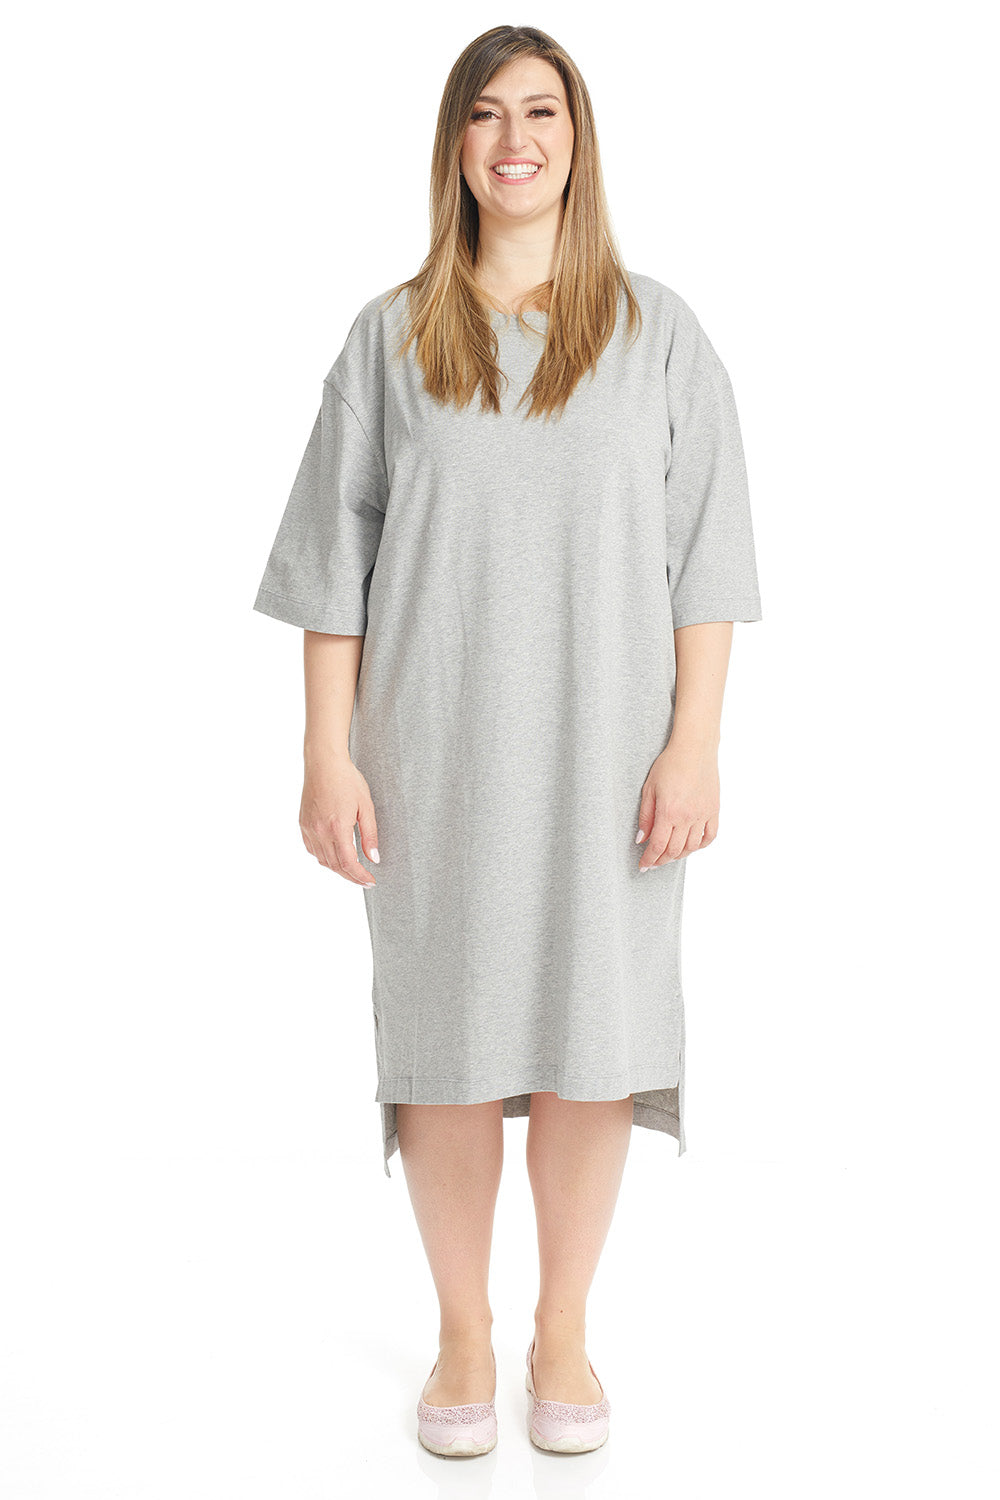 Esteez Oversized High-Low Dress - Women's Midi Cotton 3/4 Sleeve T-shirt Dress - LIGHT GREY